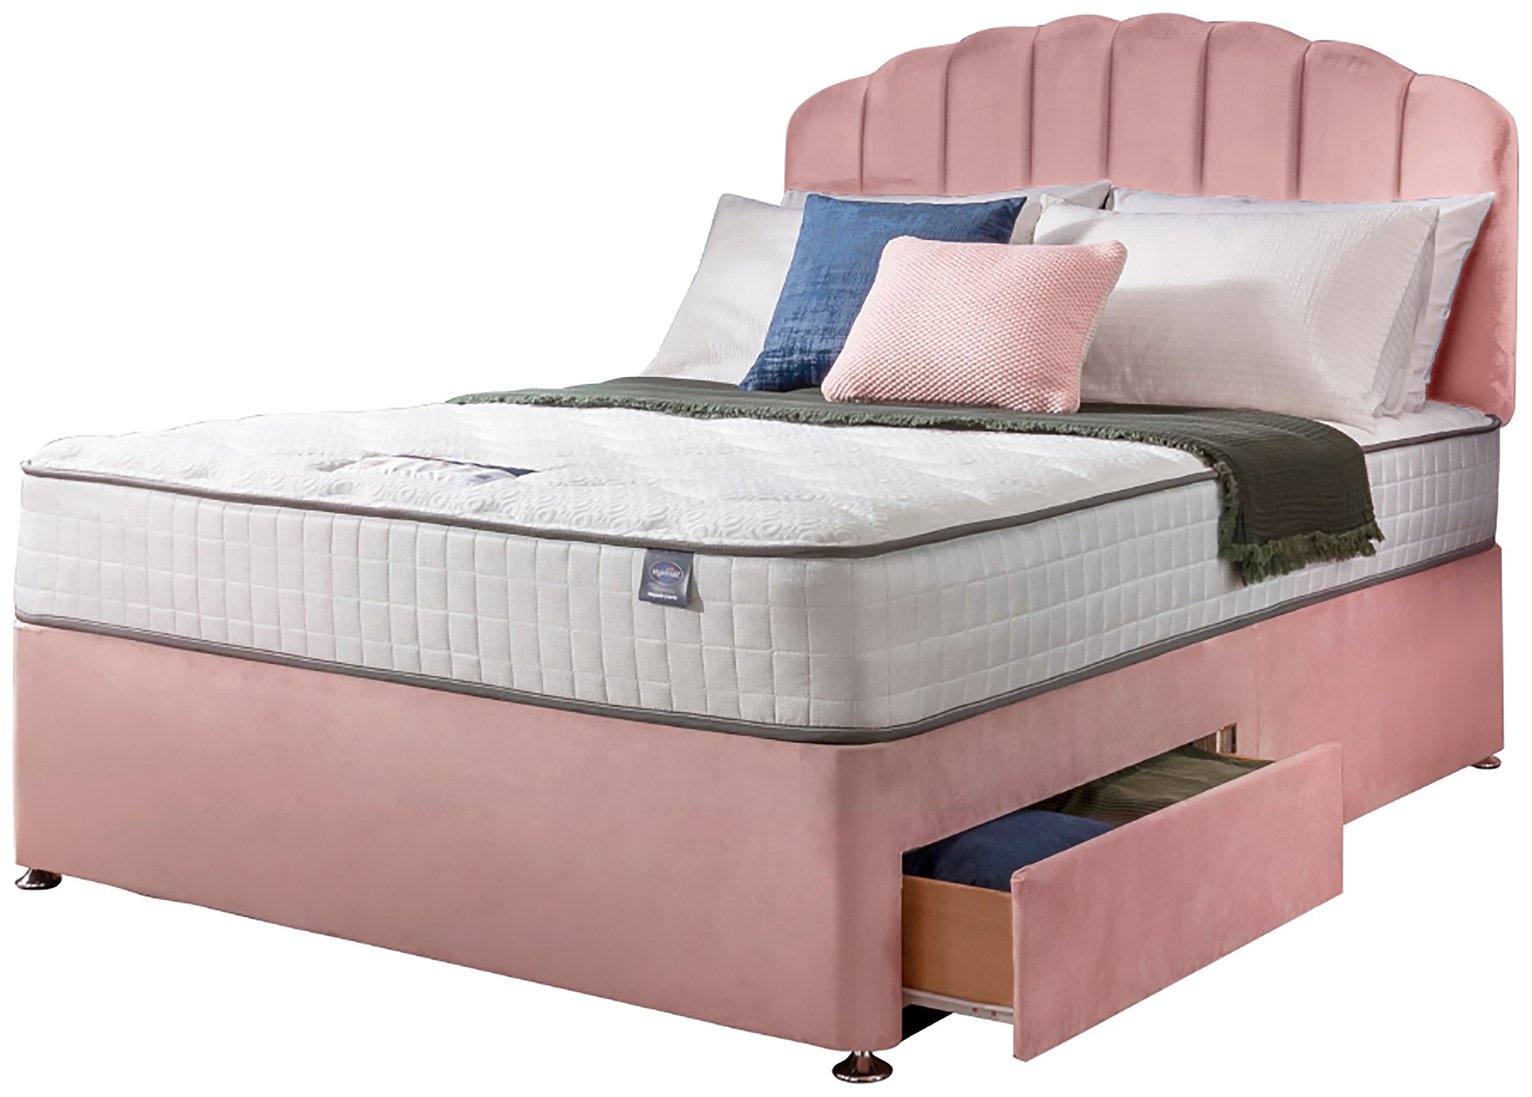 Silentnight Memory Kingsize 2 Drawer Divan Bed - Pink